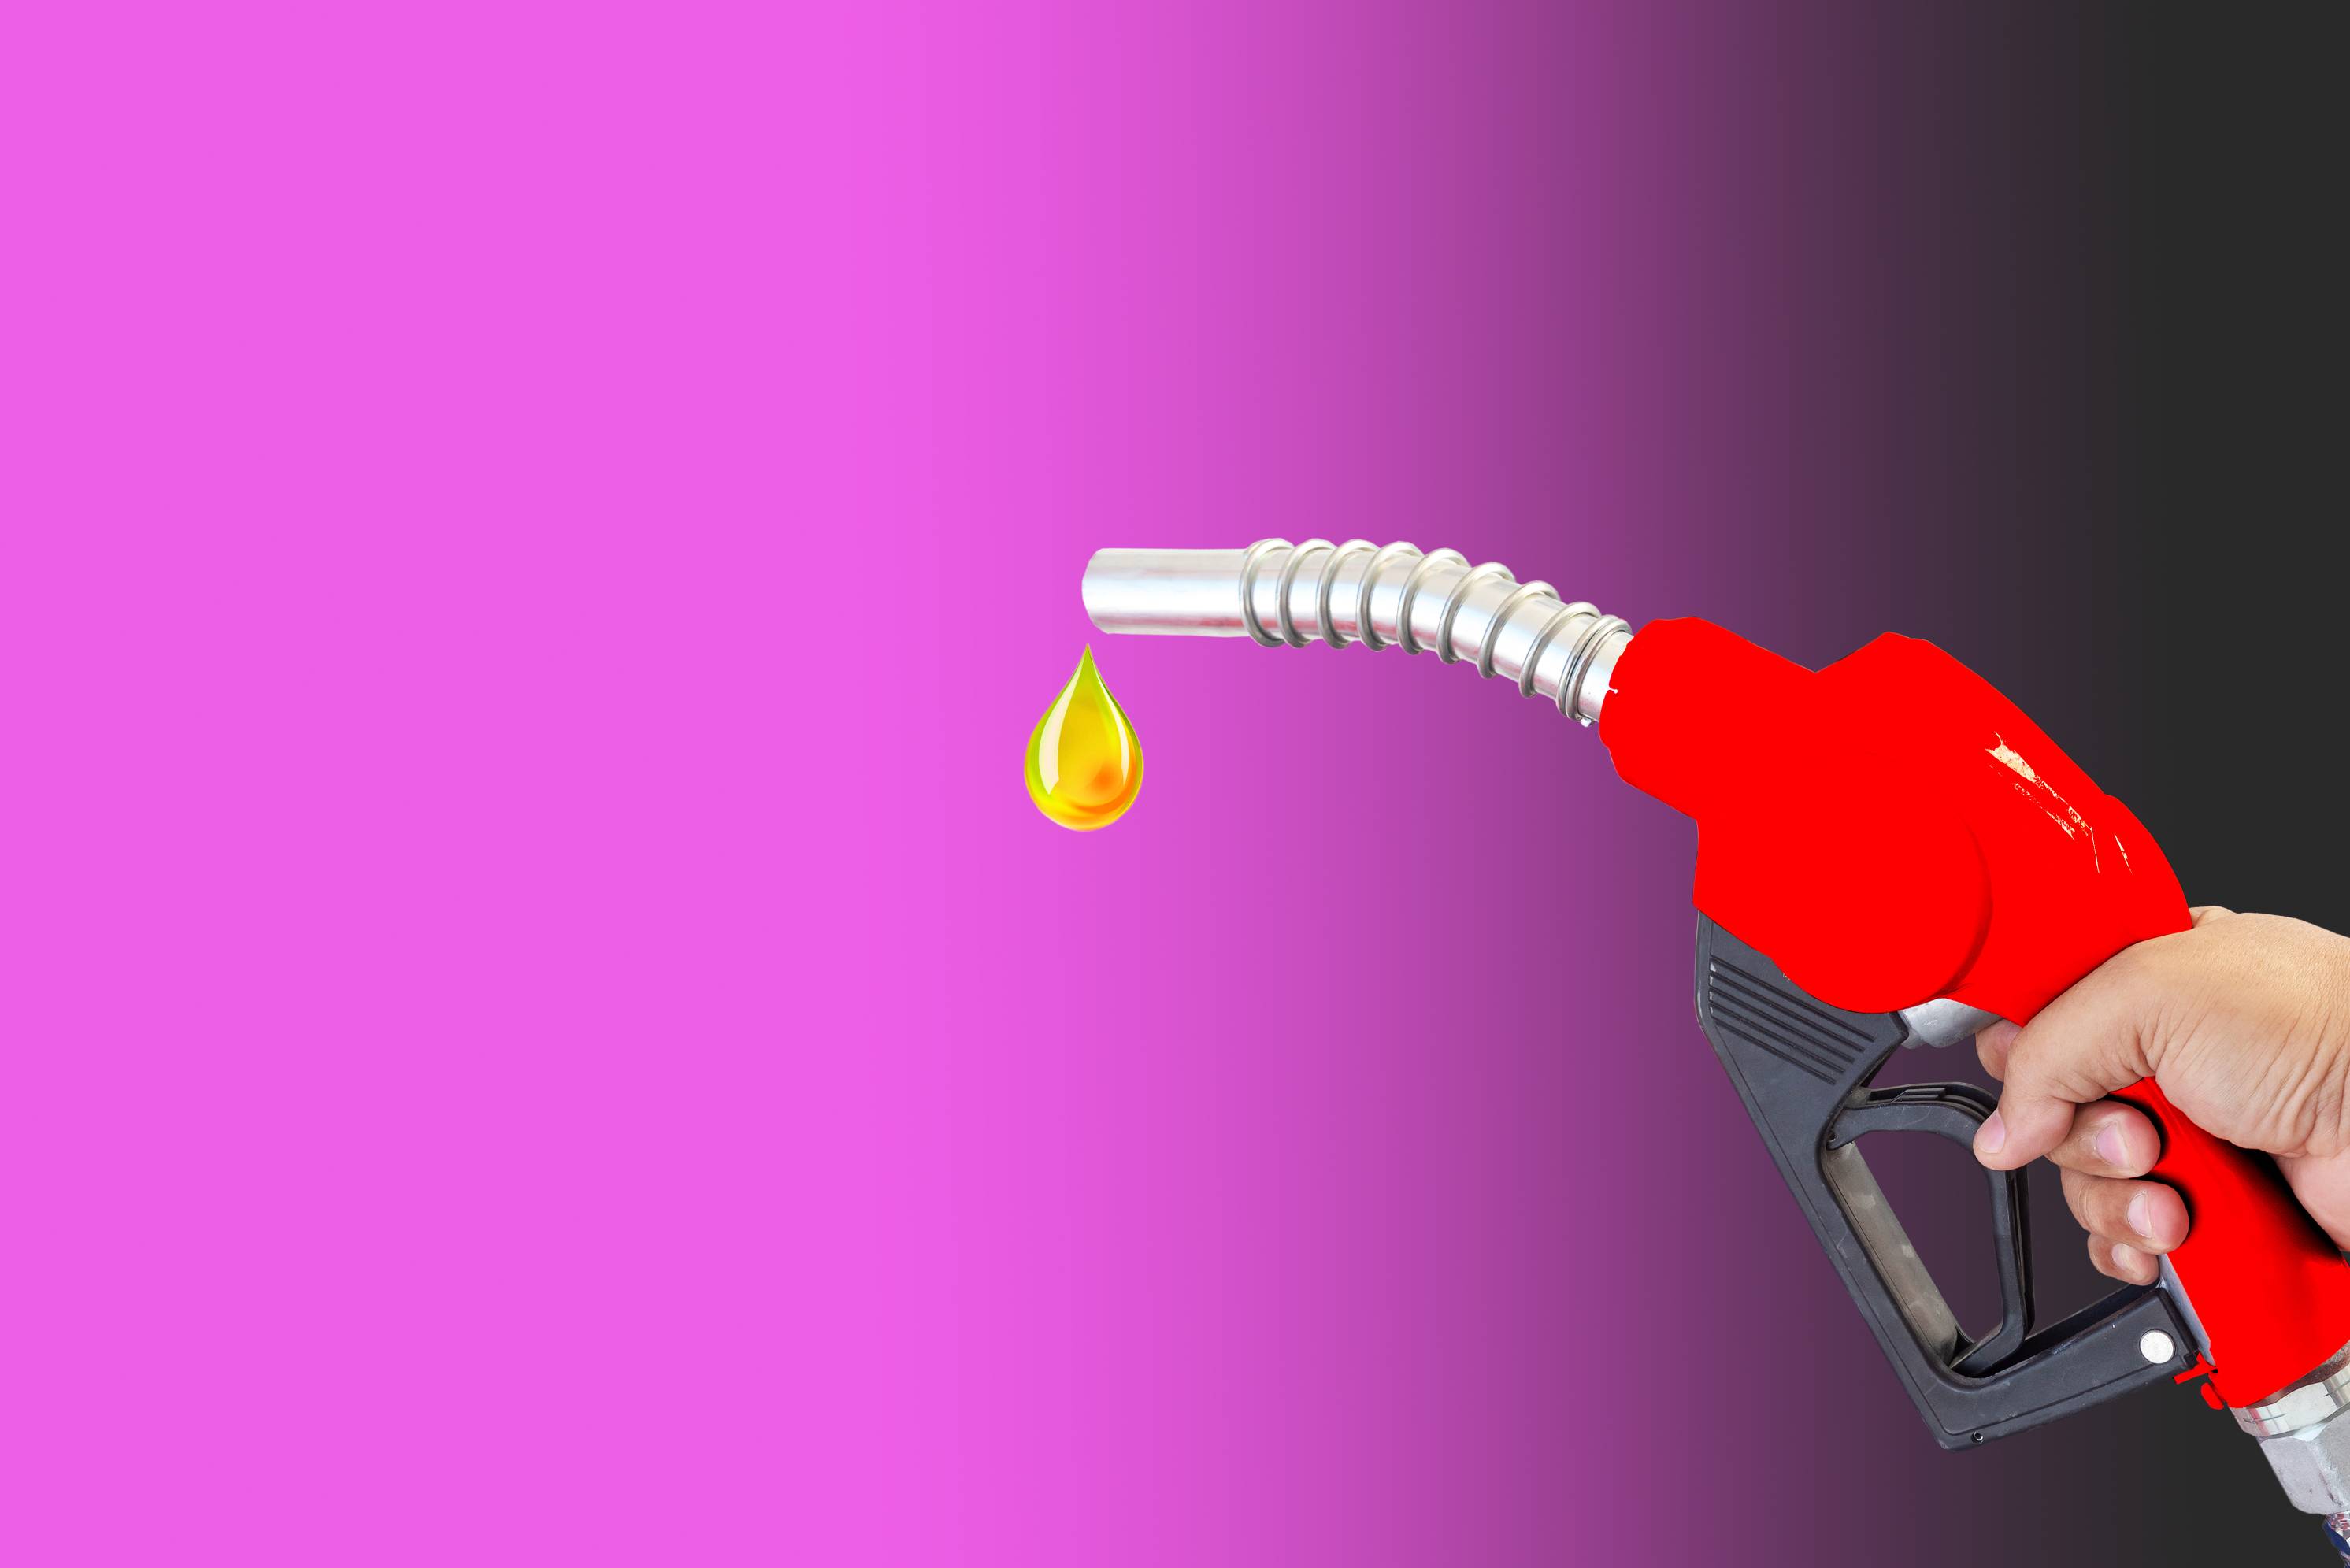 petrol prices